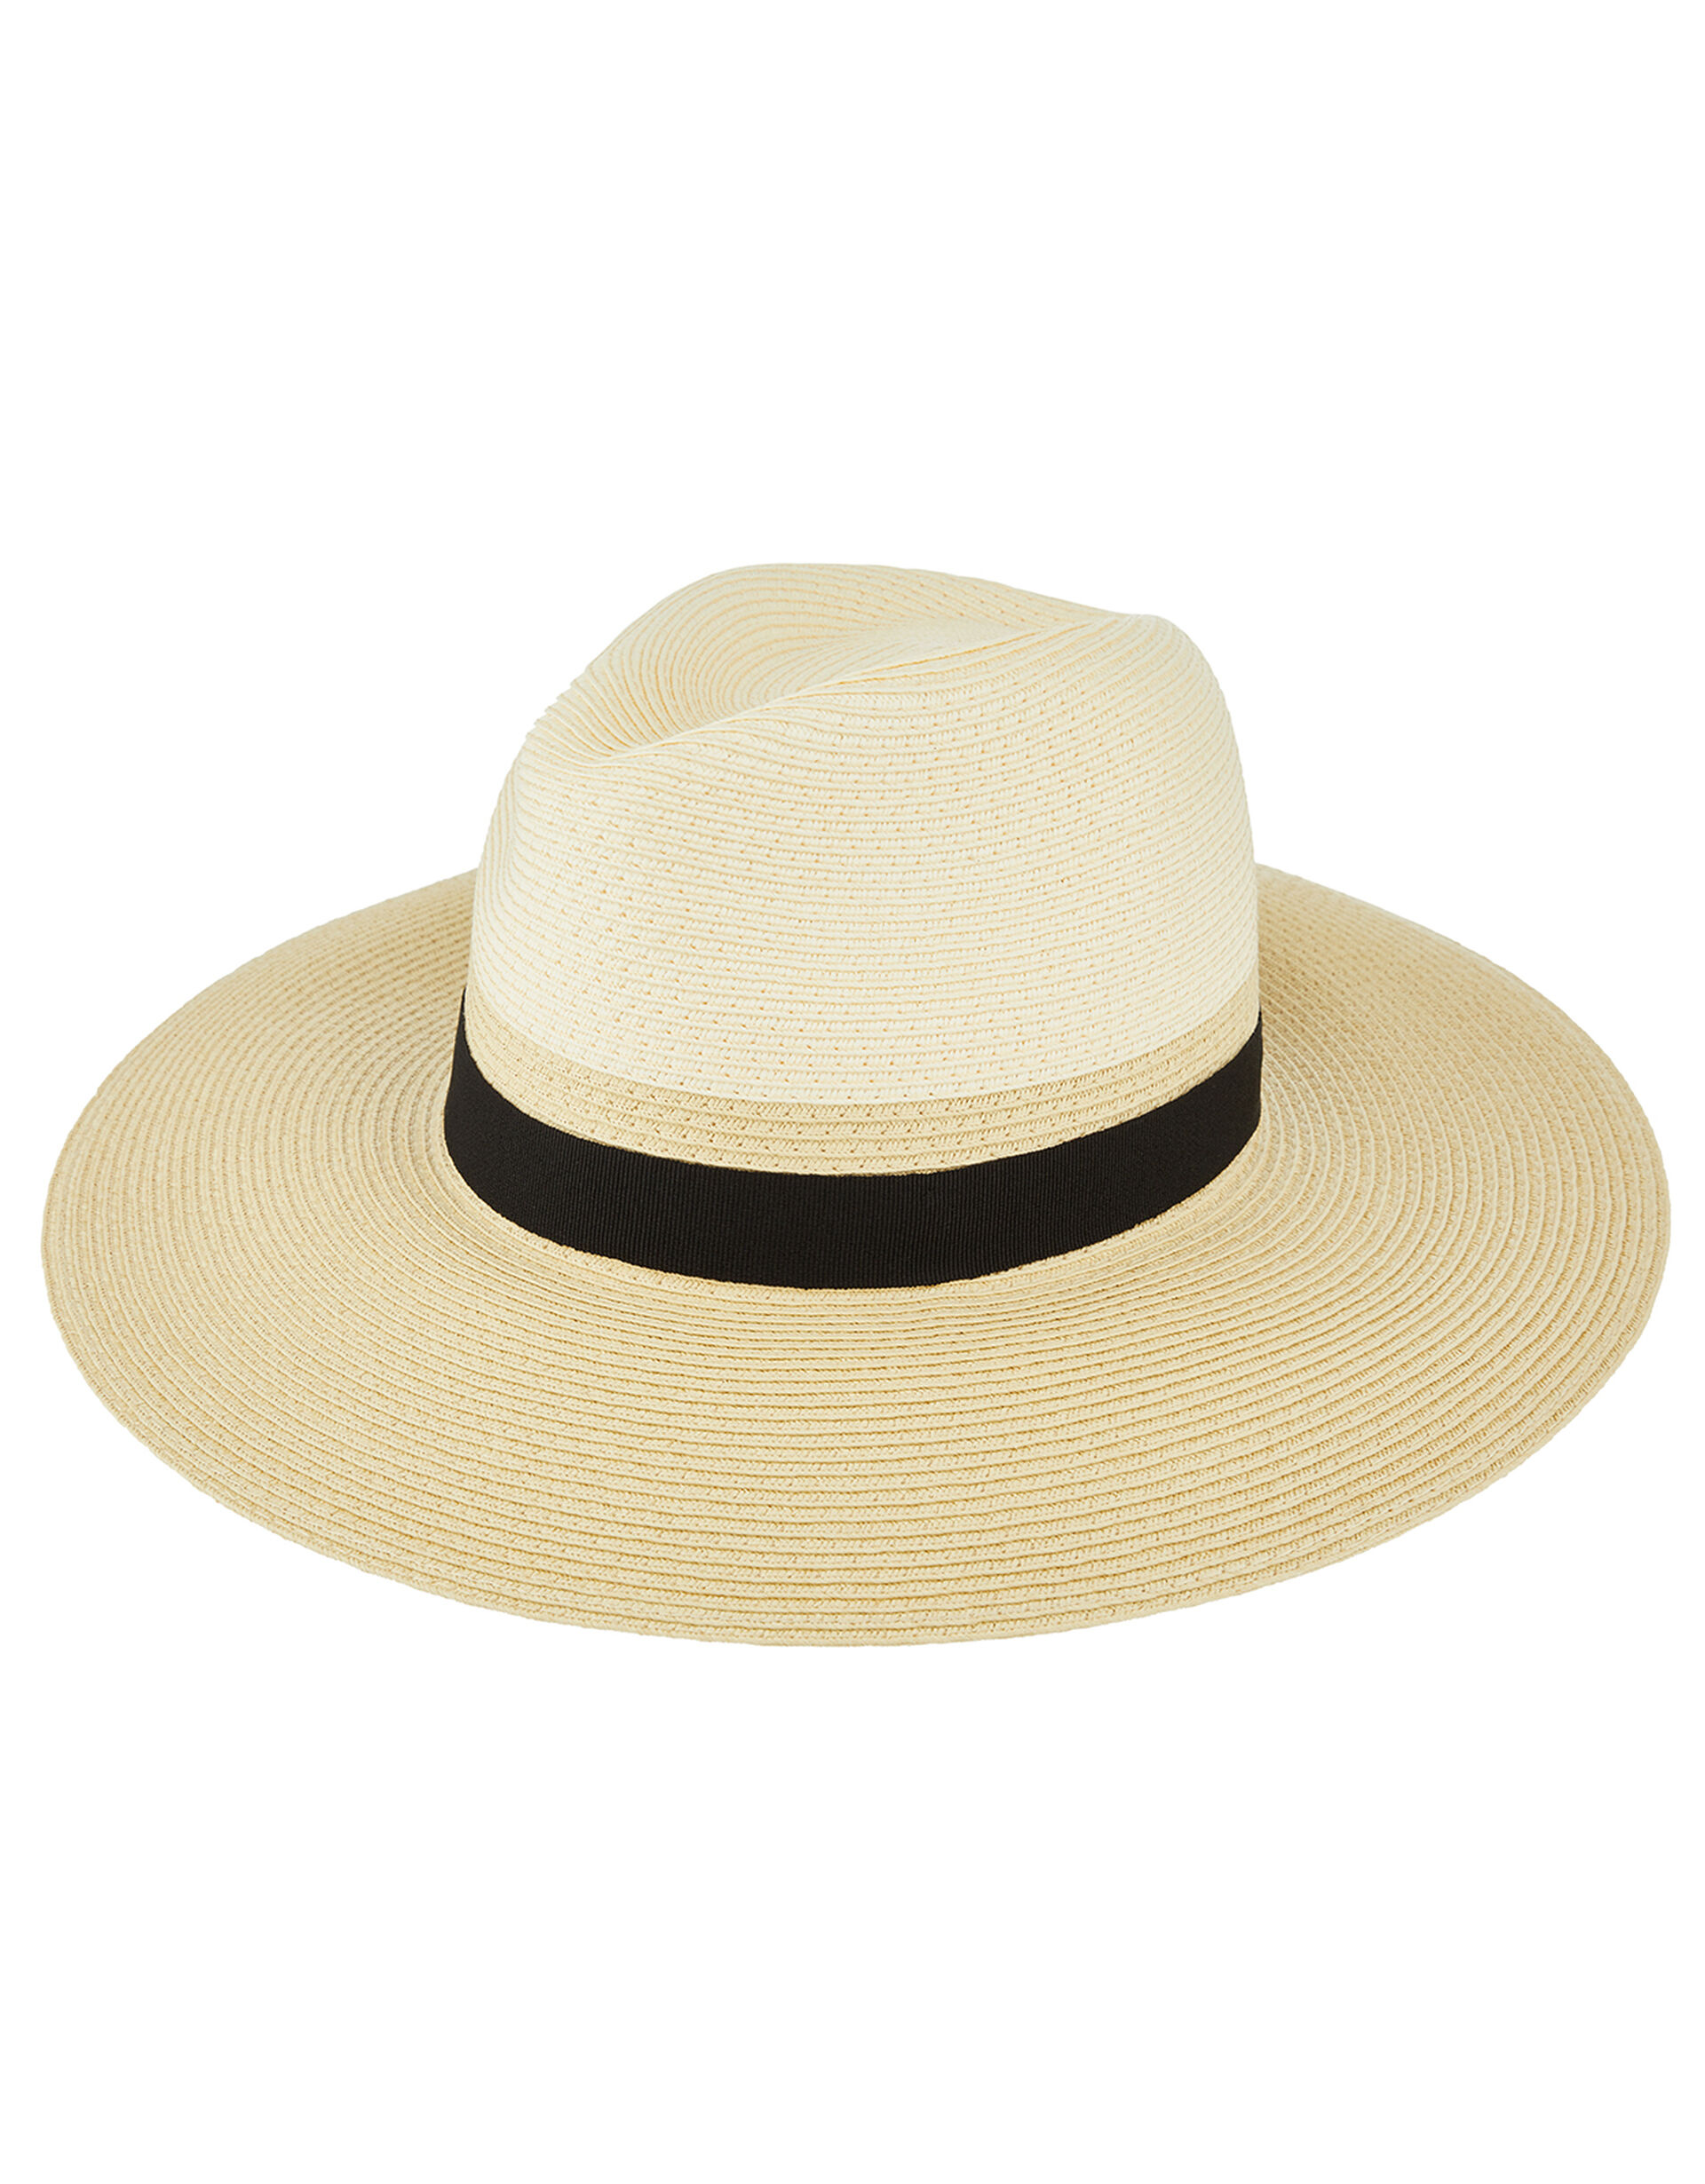 Two Tone Fedora Hat, Natural (NATURAL), large